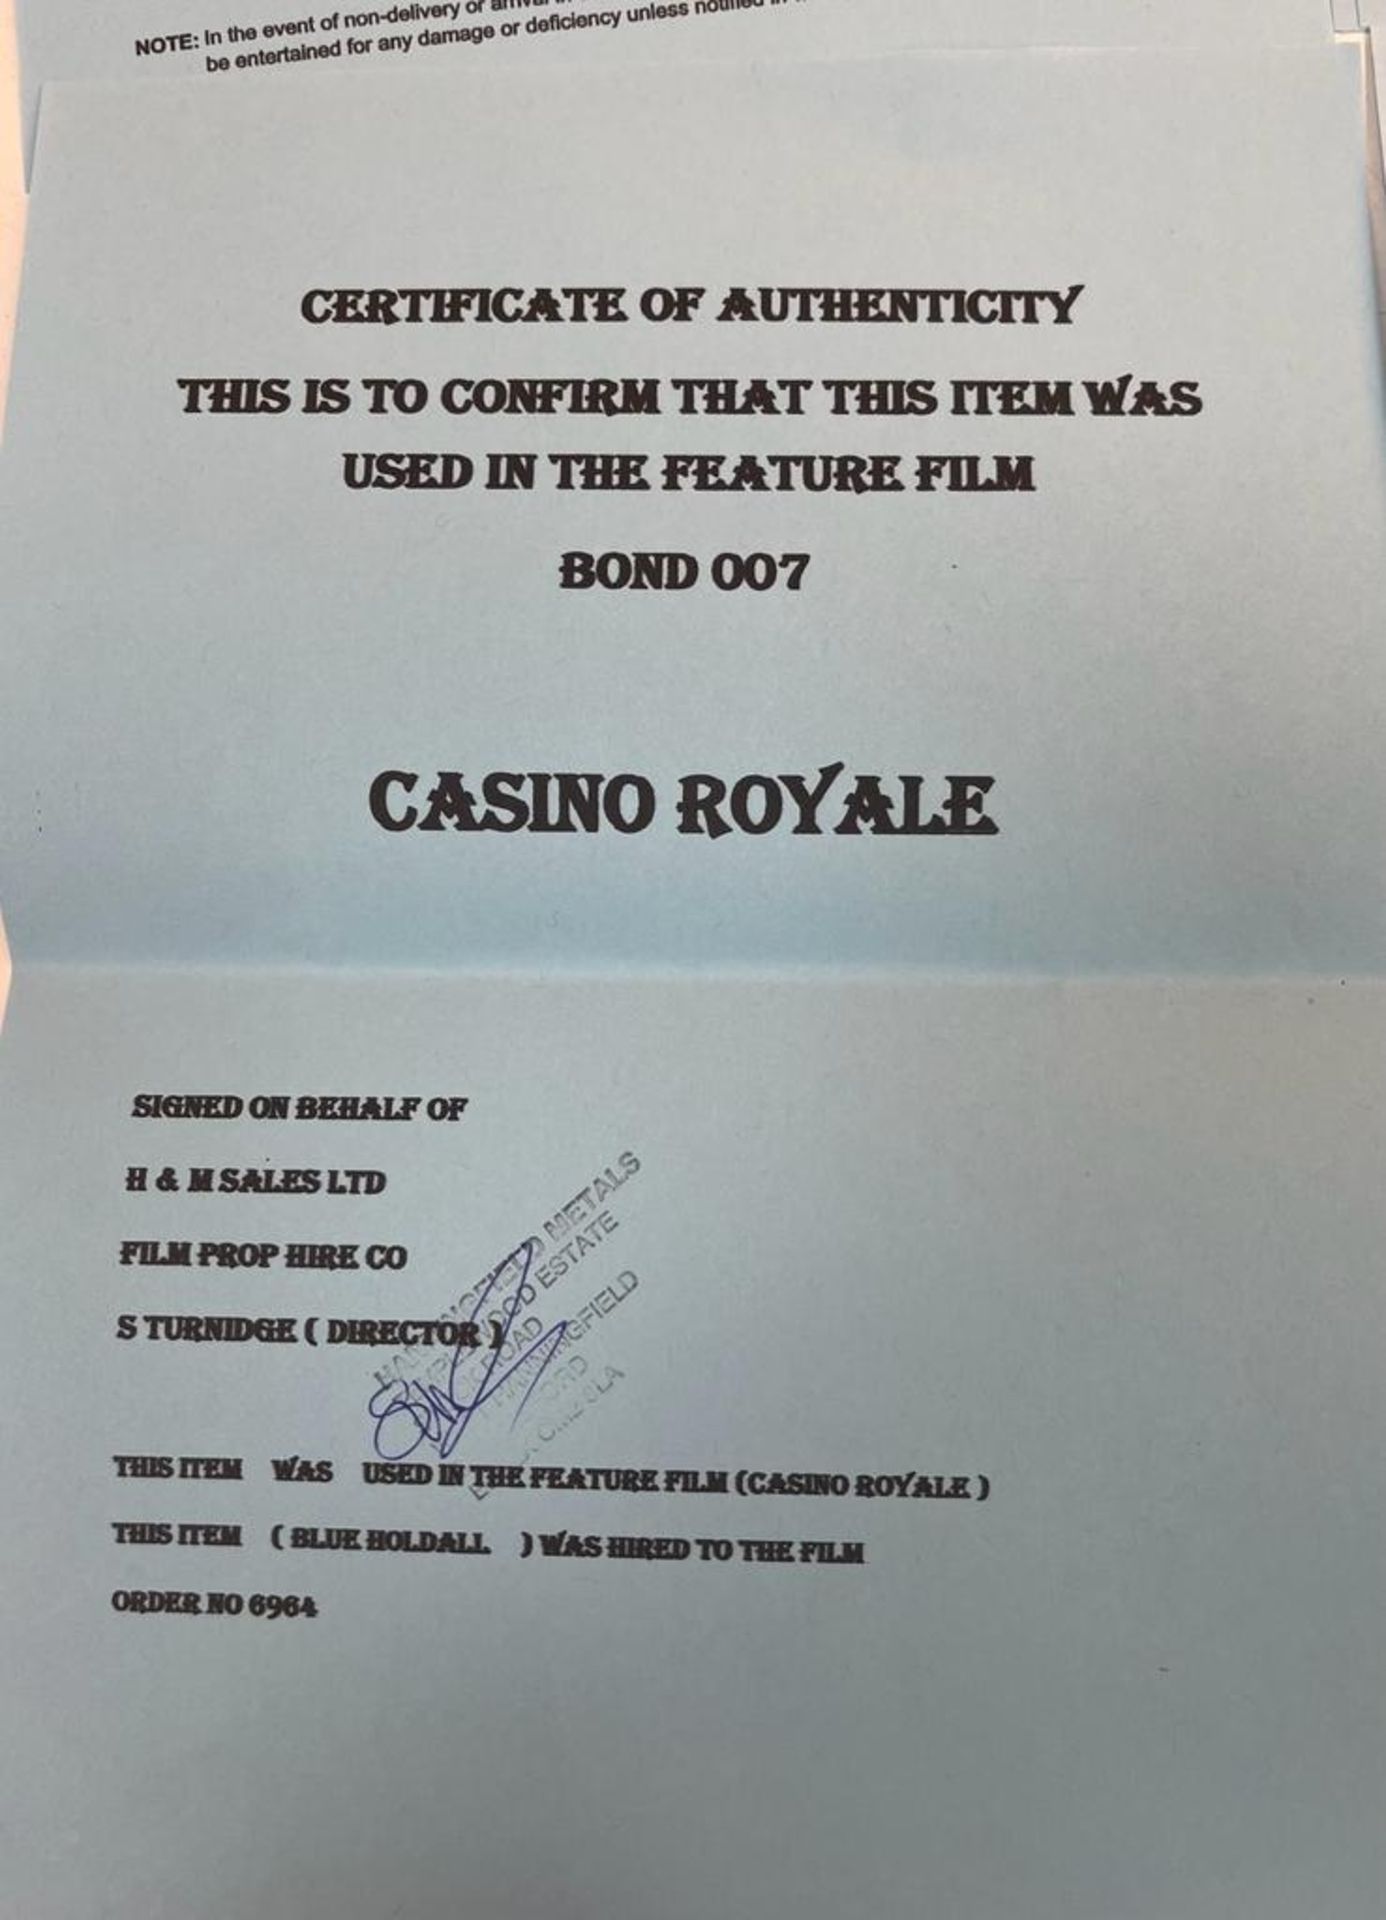 James Bond Casino Royale Movie Prop Memorabilia. Original 007 Royal Blue Holdall Bag (one of 20) - Image 4 of 6